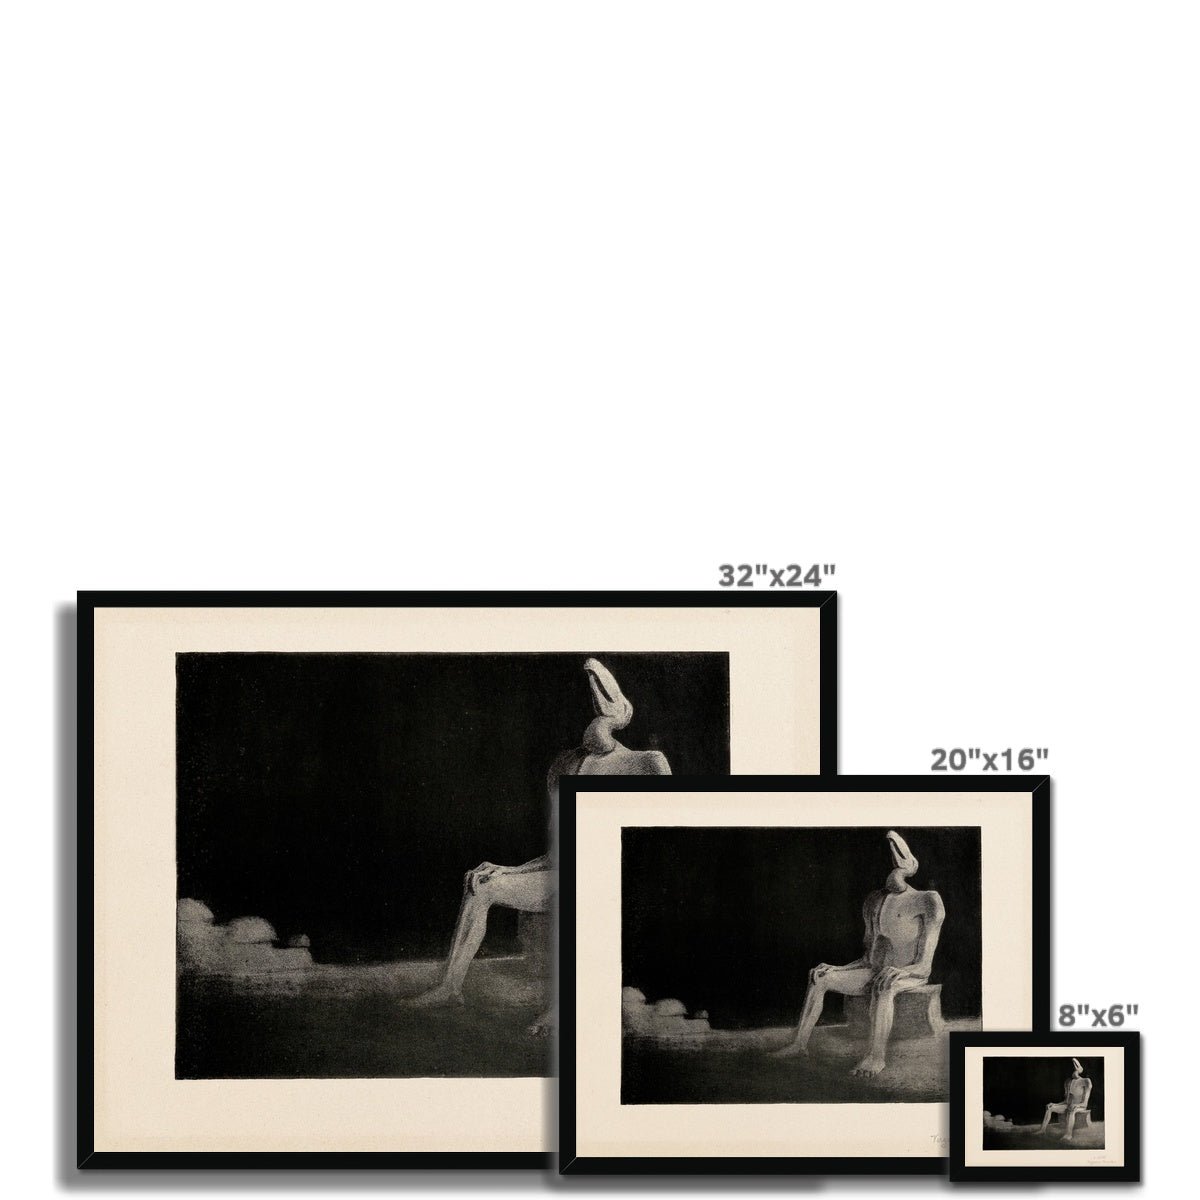 Framed Print 8"x6" / Black Frame Framed Alfred Kubin: The Past Forgotten, Swallowed, Symbolist Surrealist Occult Gothic Macabre Framed Art Print